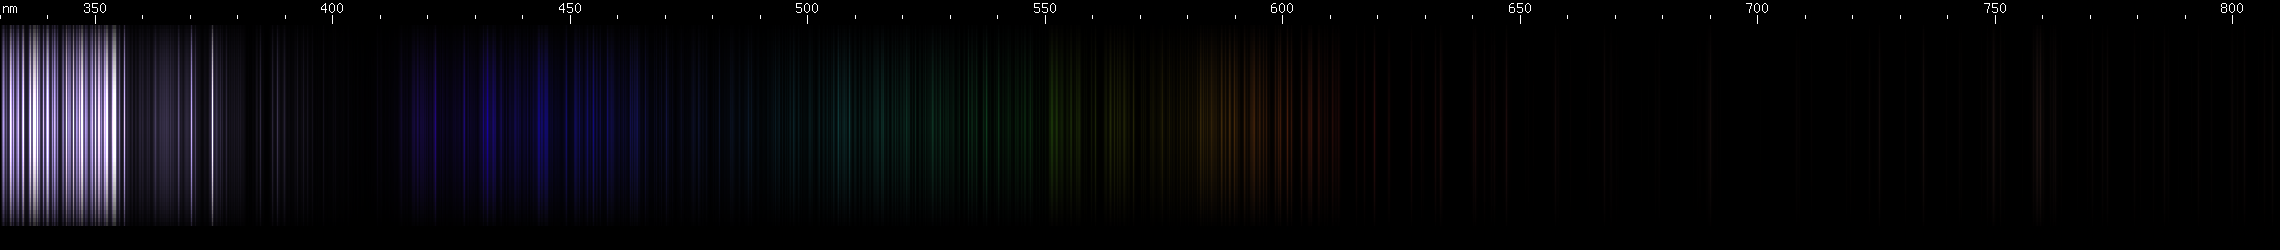 Spectral lines of Terbium.